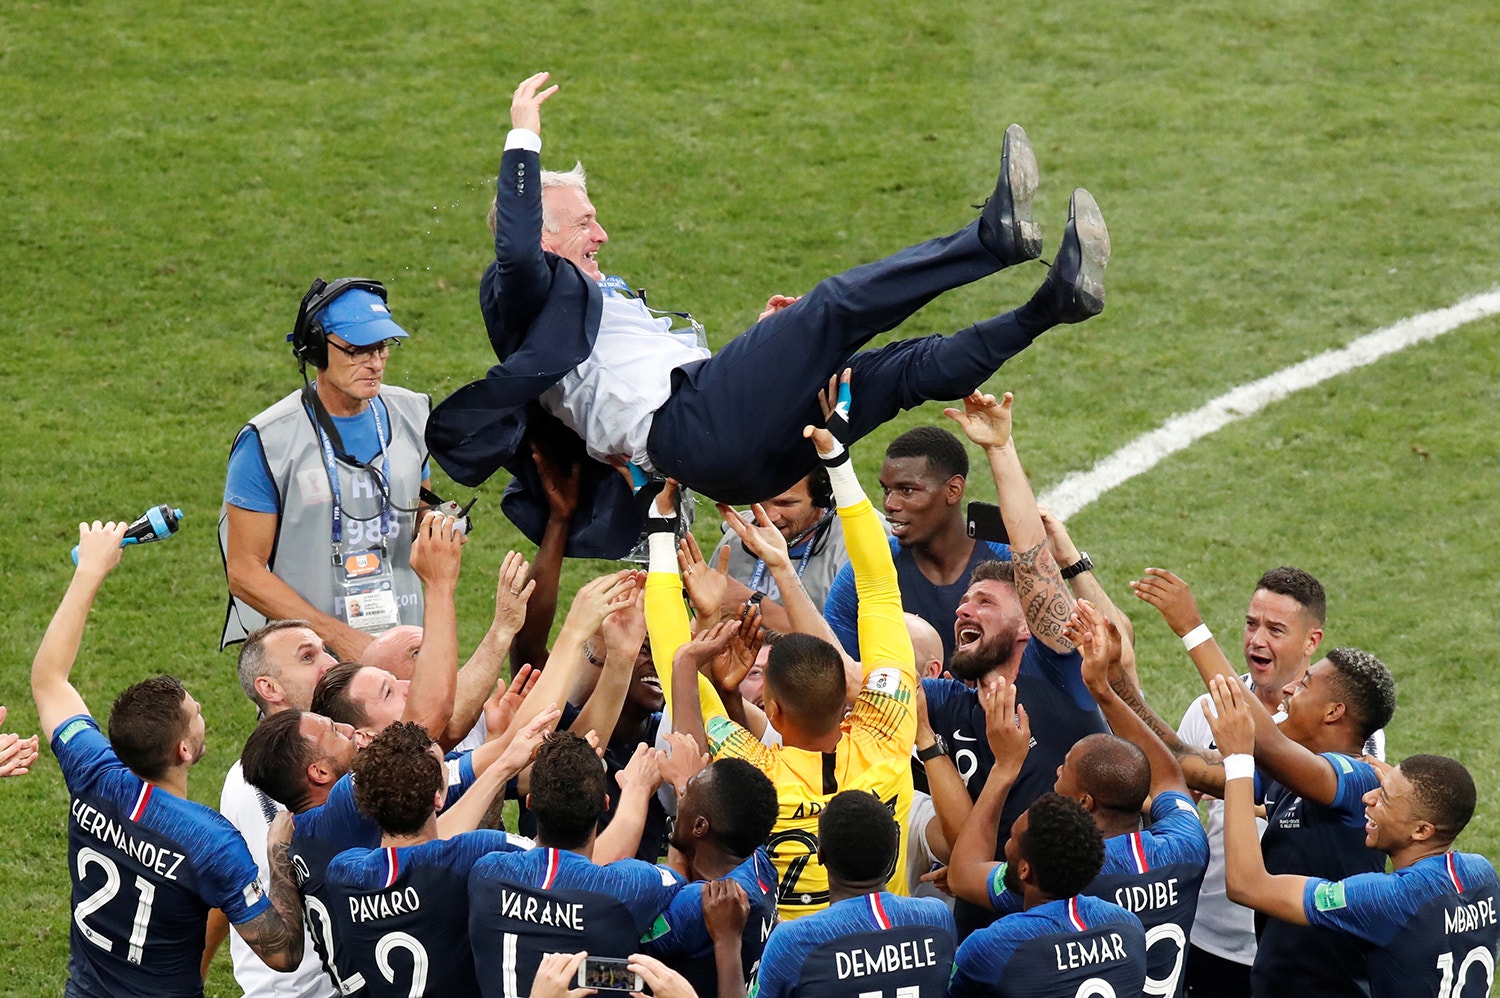  A sele&ccedil;&atilde;o francesa comemora a vit&oacute;ria do Mundial de Futebol /Christian Hartmann - Reuters 